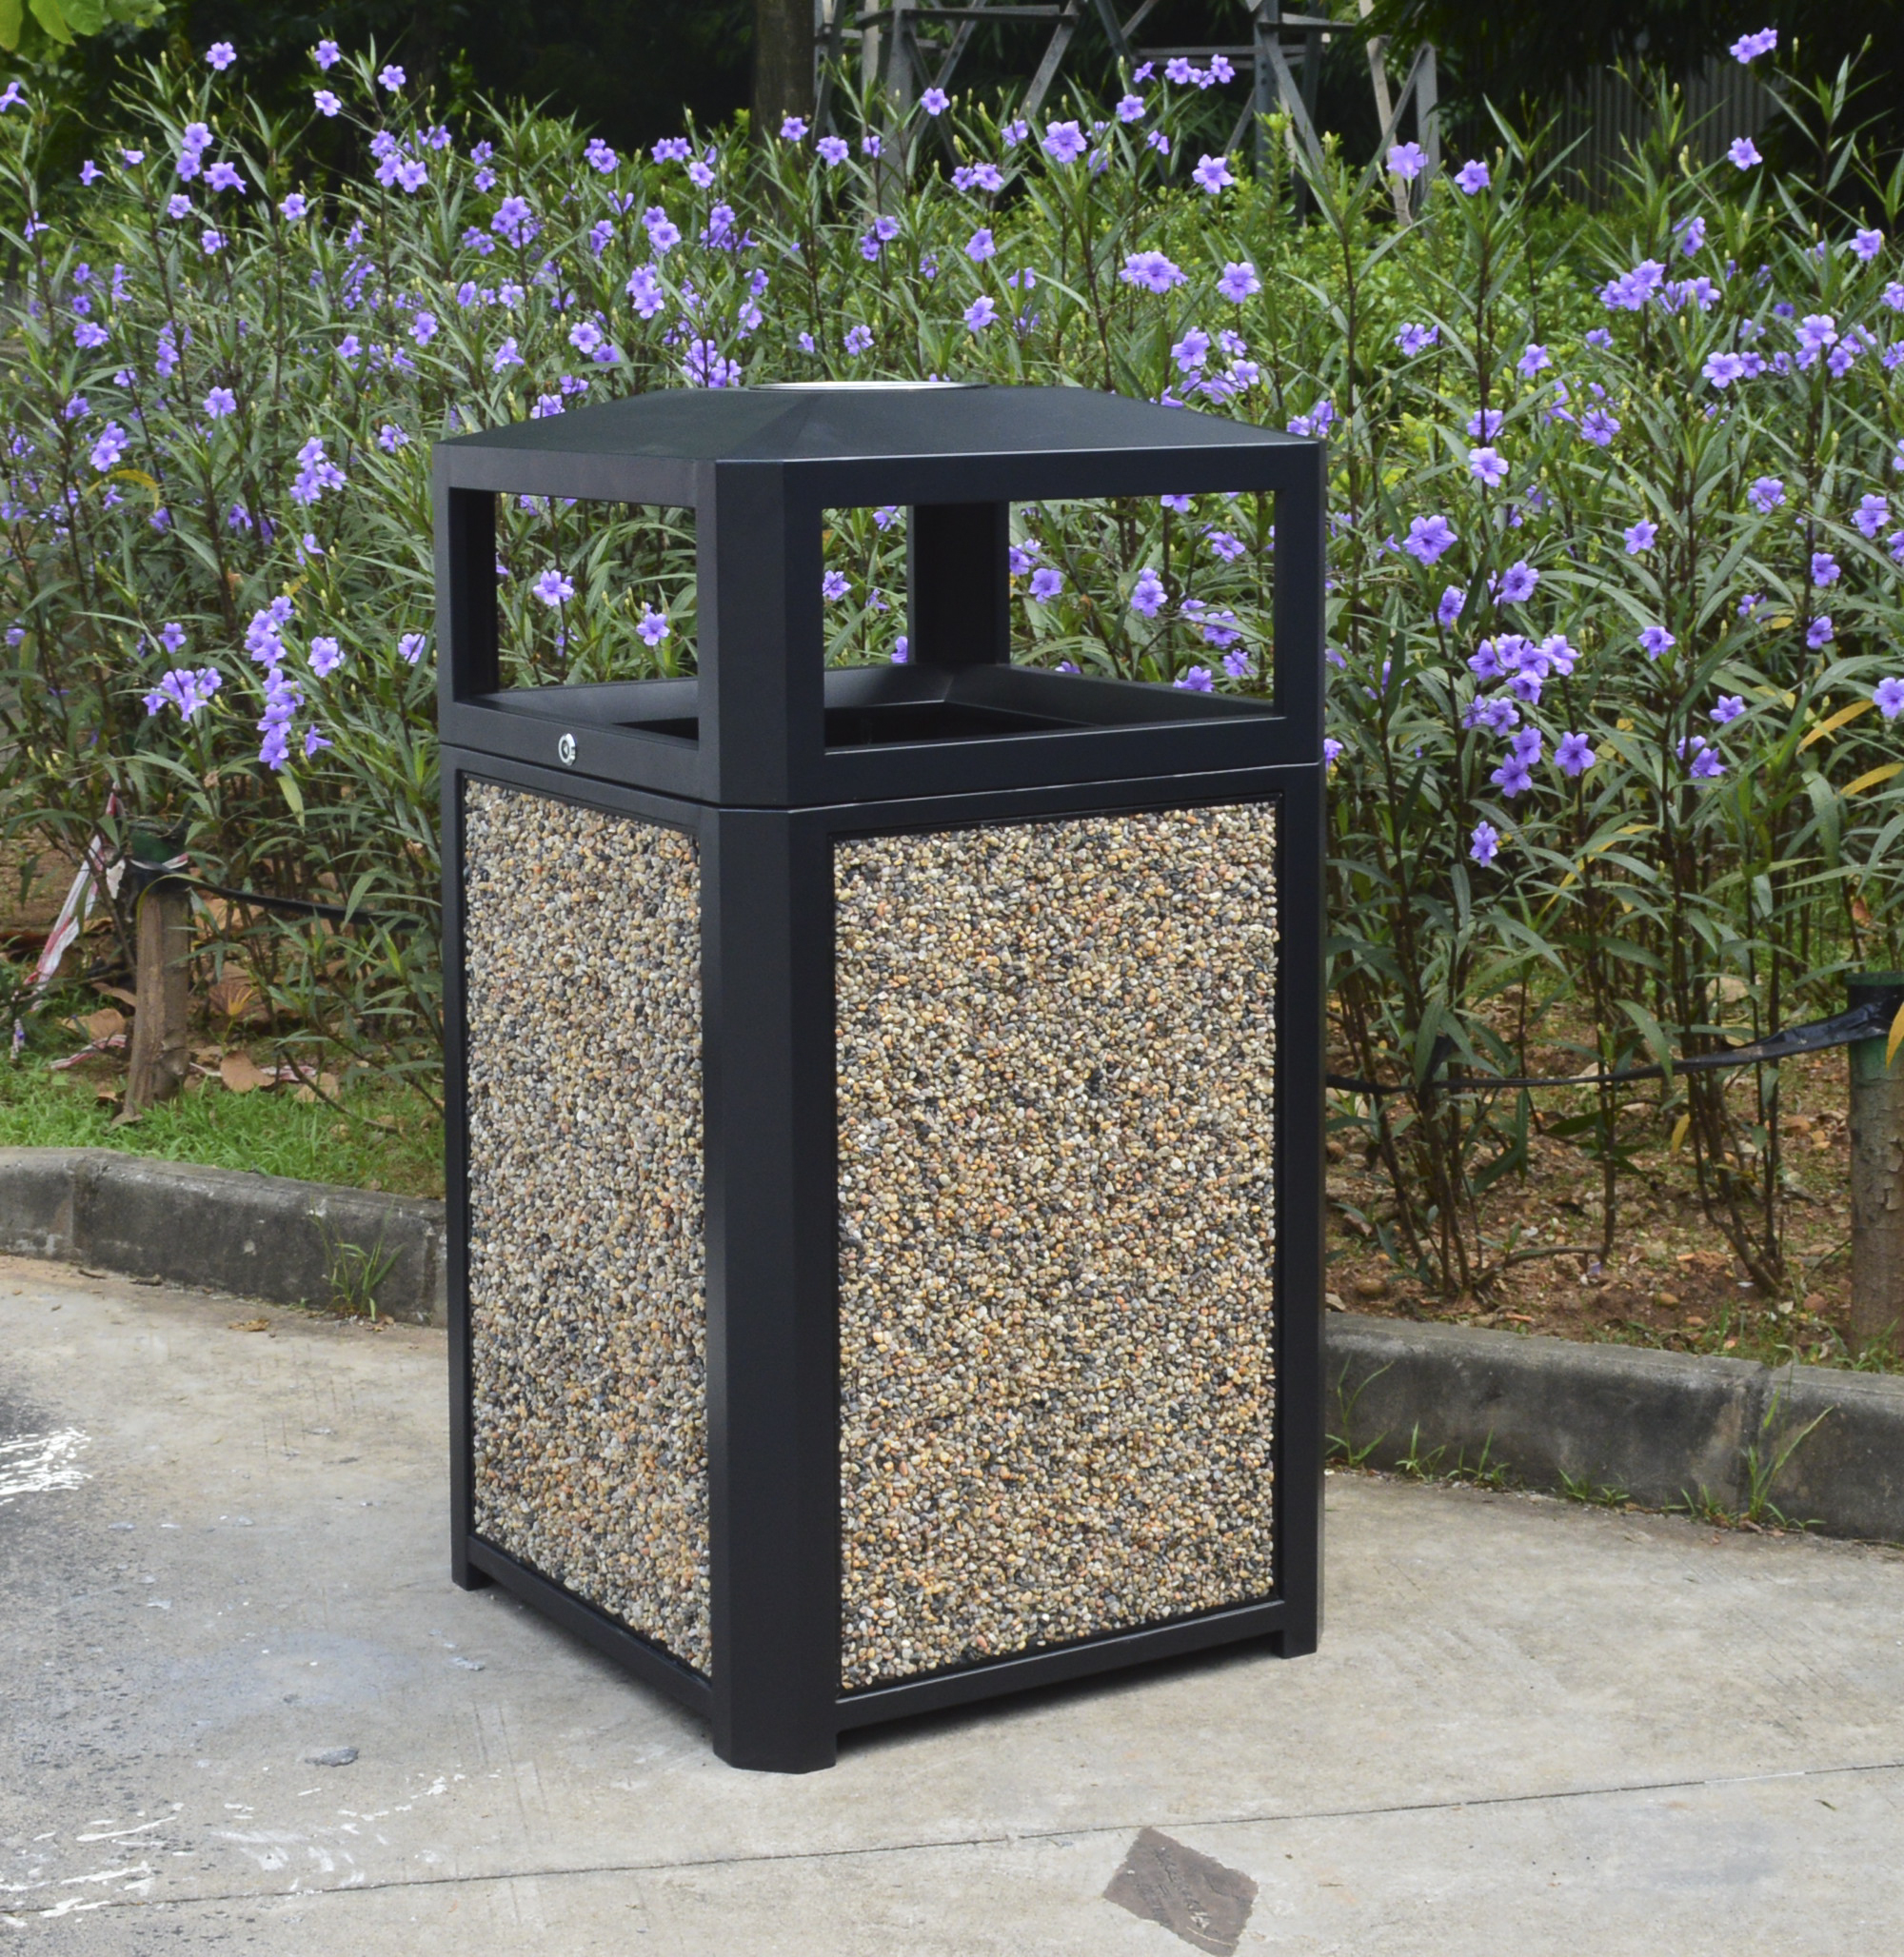 Stainlss Steel Trash Bin for Public Parks